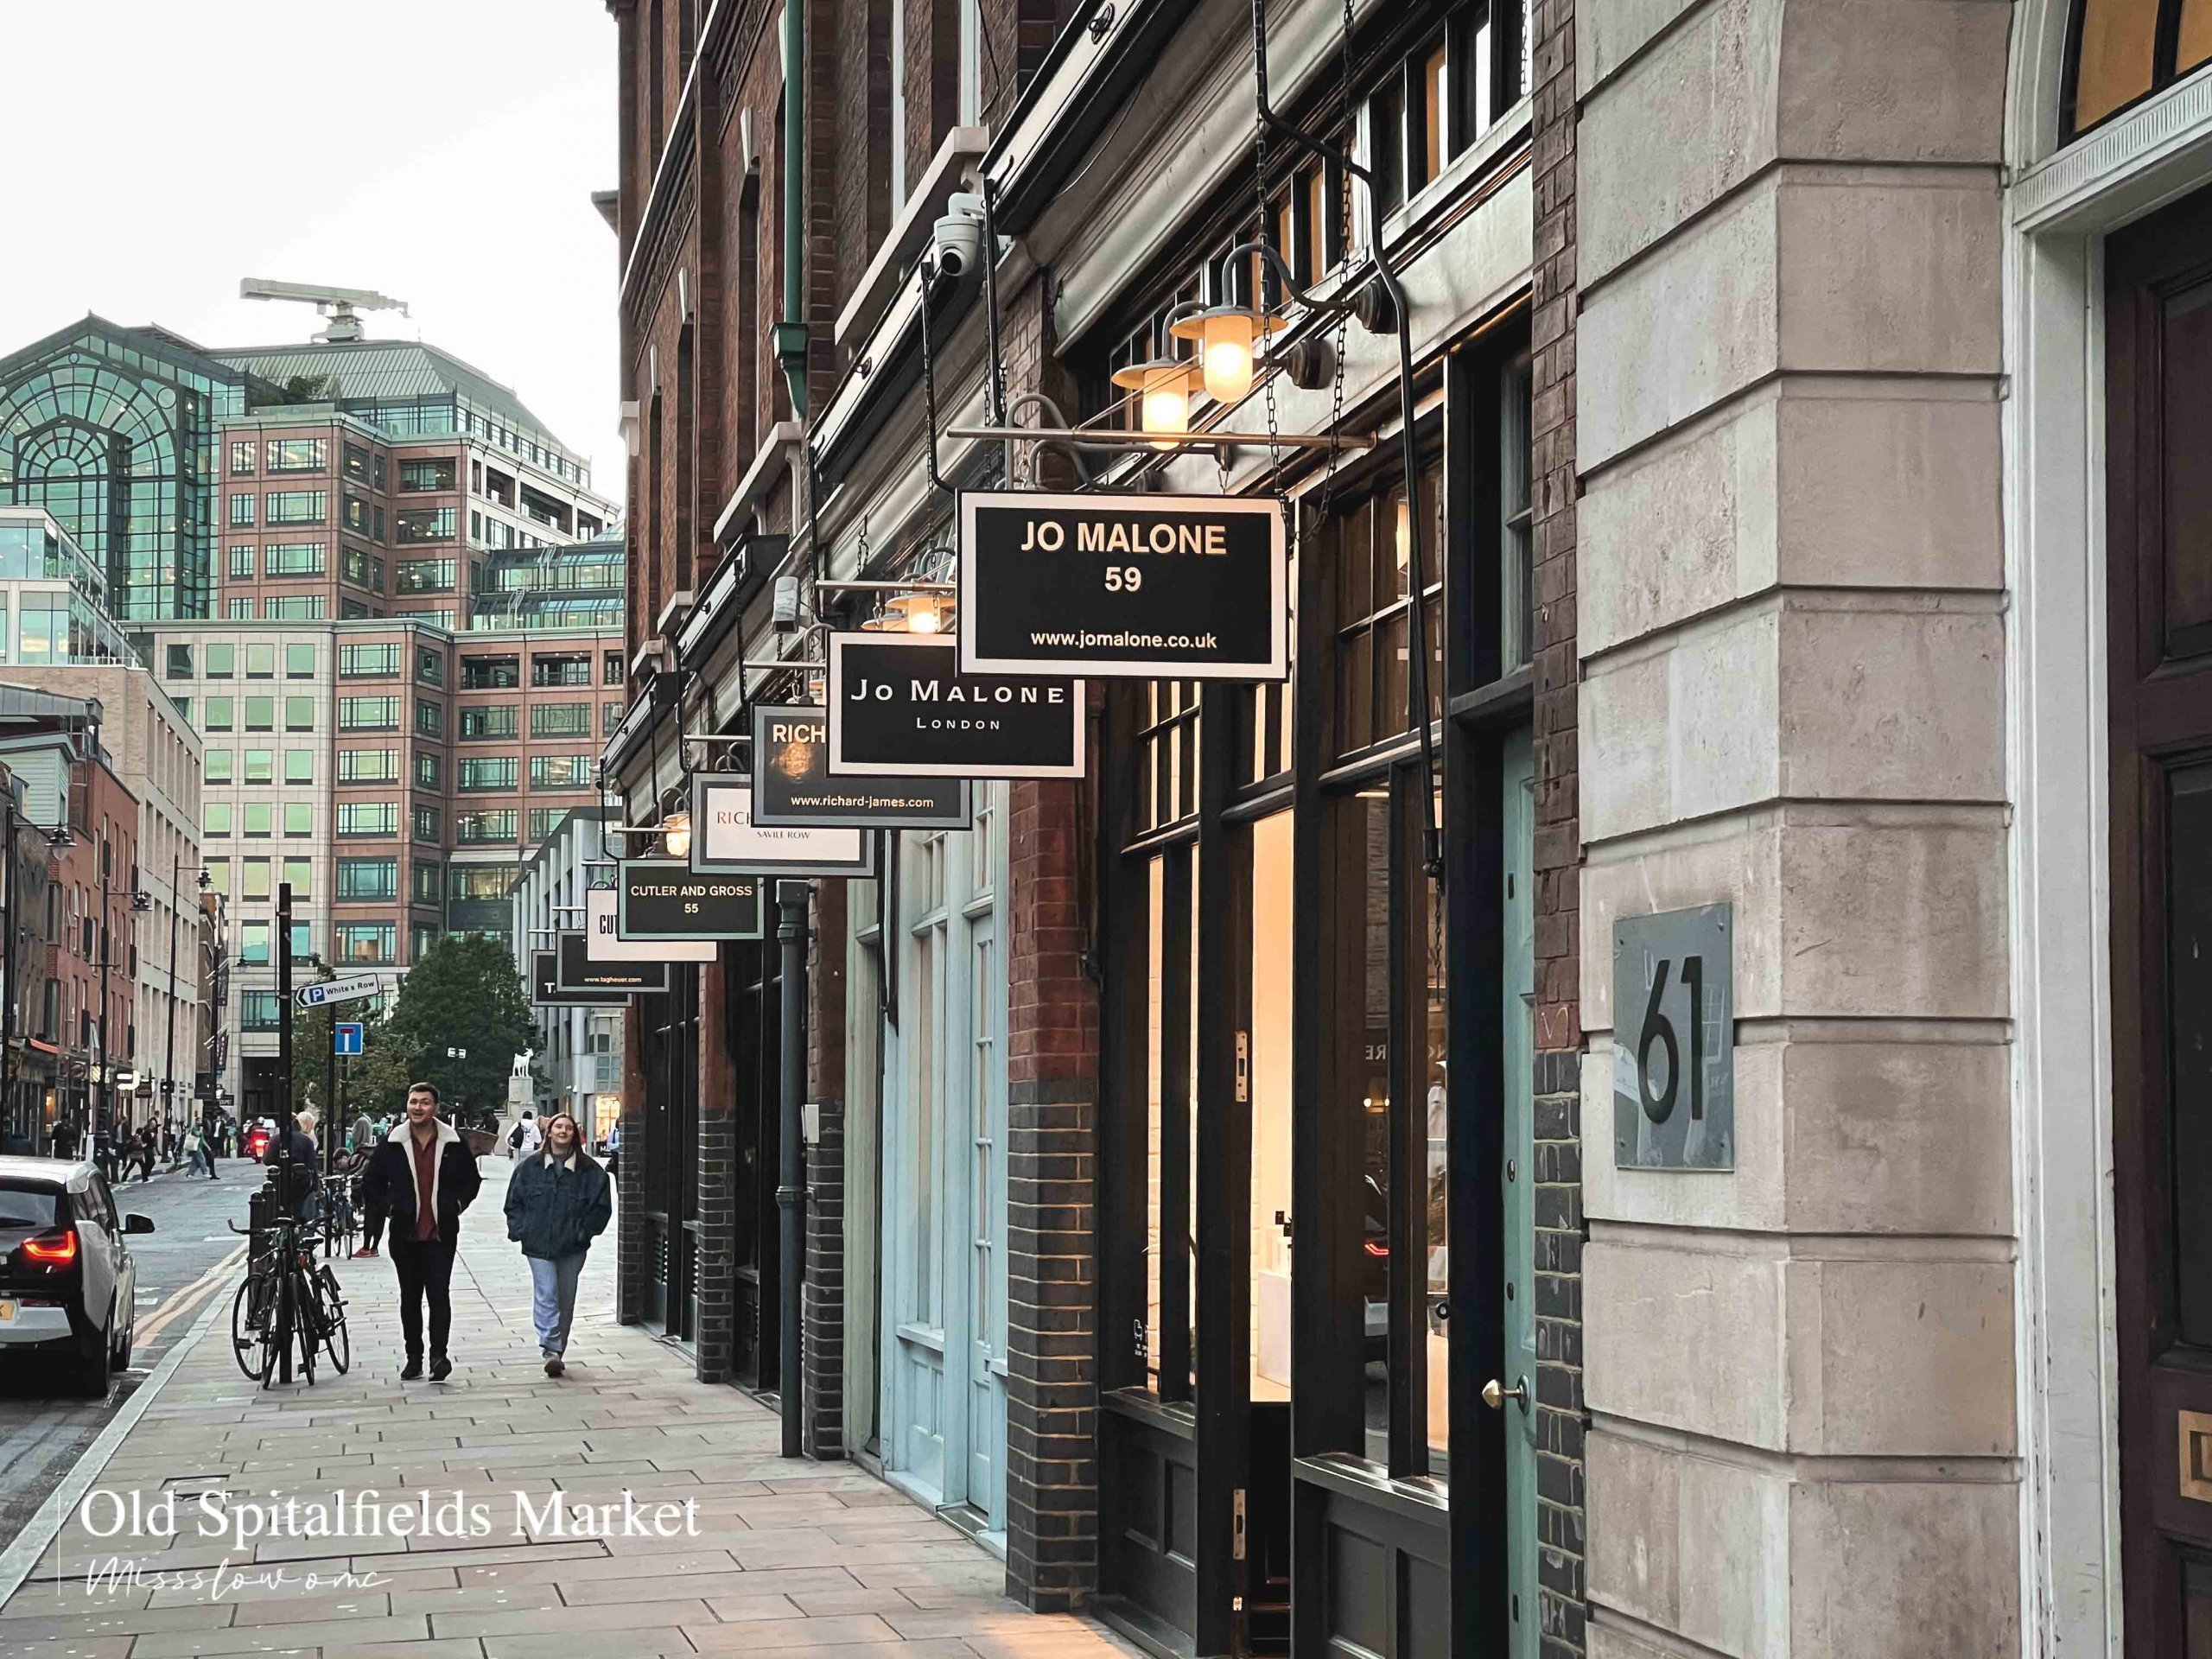 Old Spitalfields Market外圍品牌店家，有身體保養品、服飾和Barber shop。